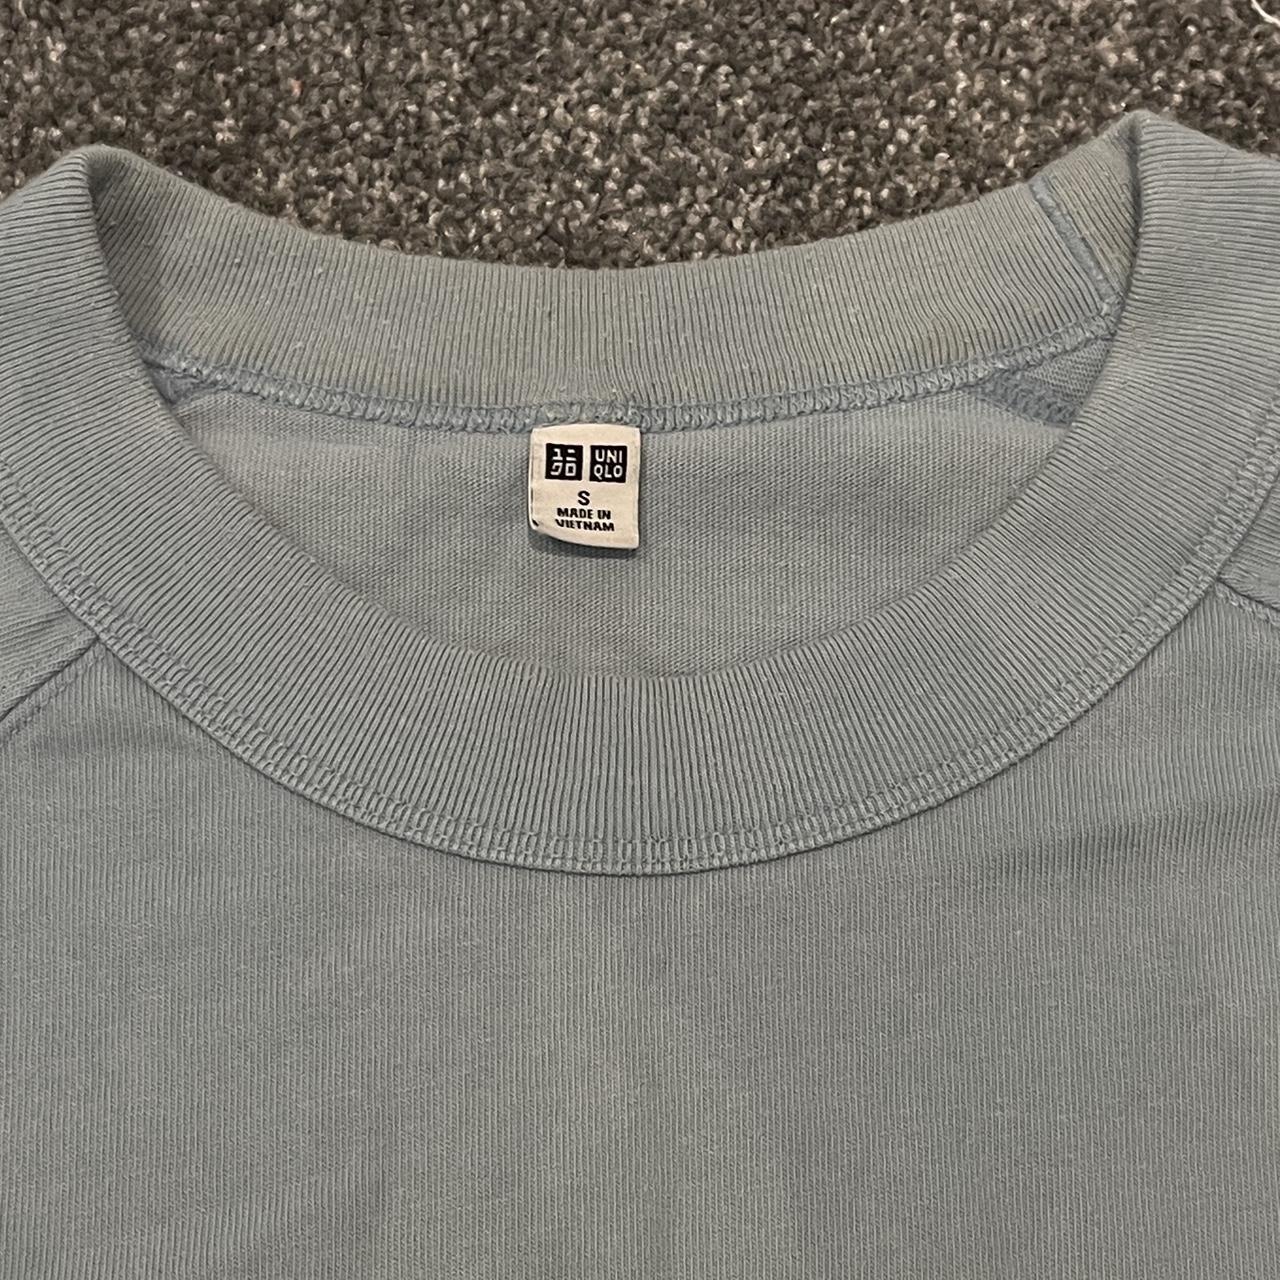 ︎*. Blue Uniqlo T-shirt Size: small Good... - Depop